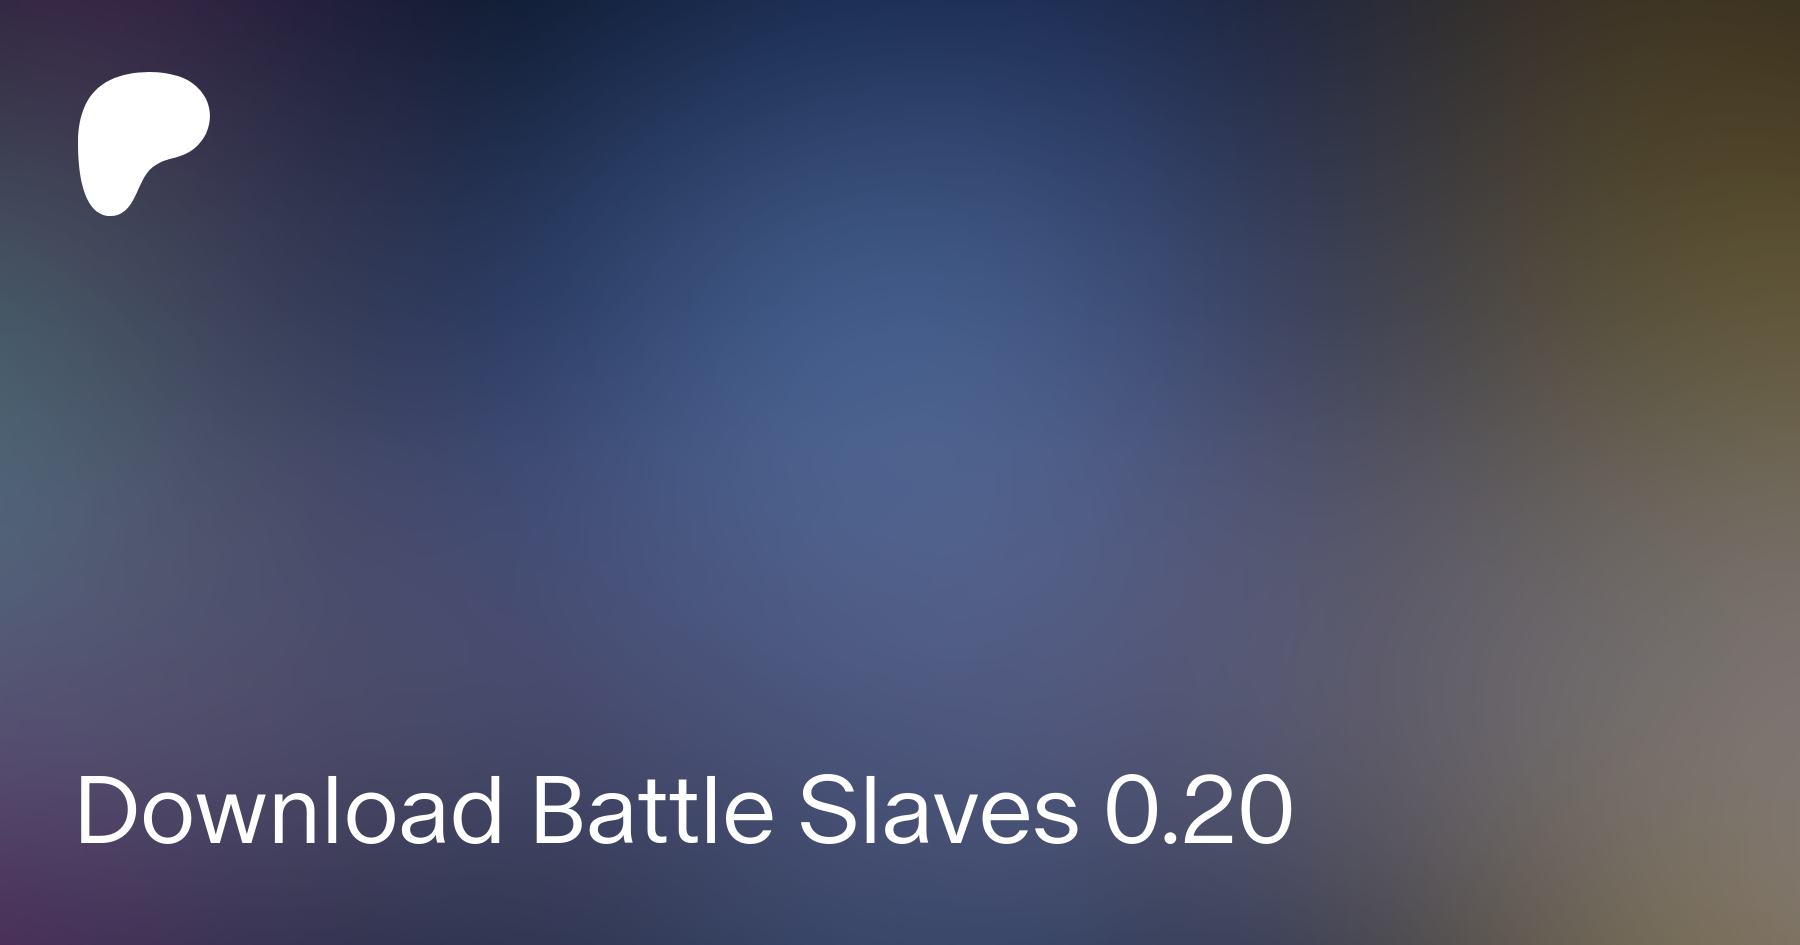 Download Battle Slaves 0.20 | Patreon